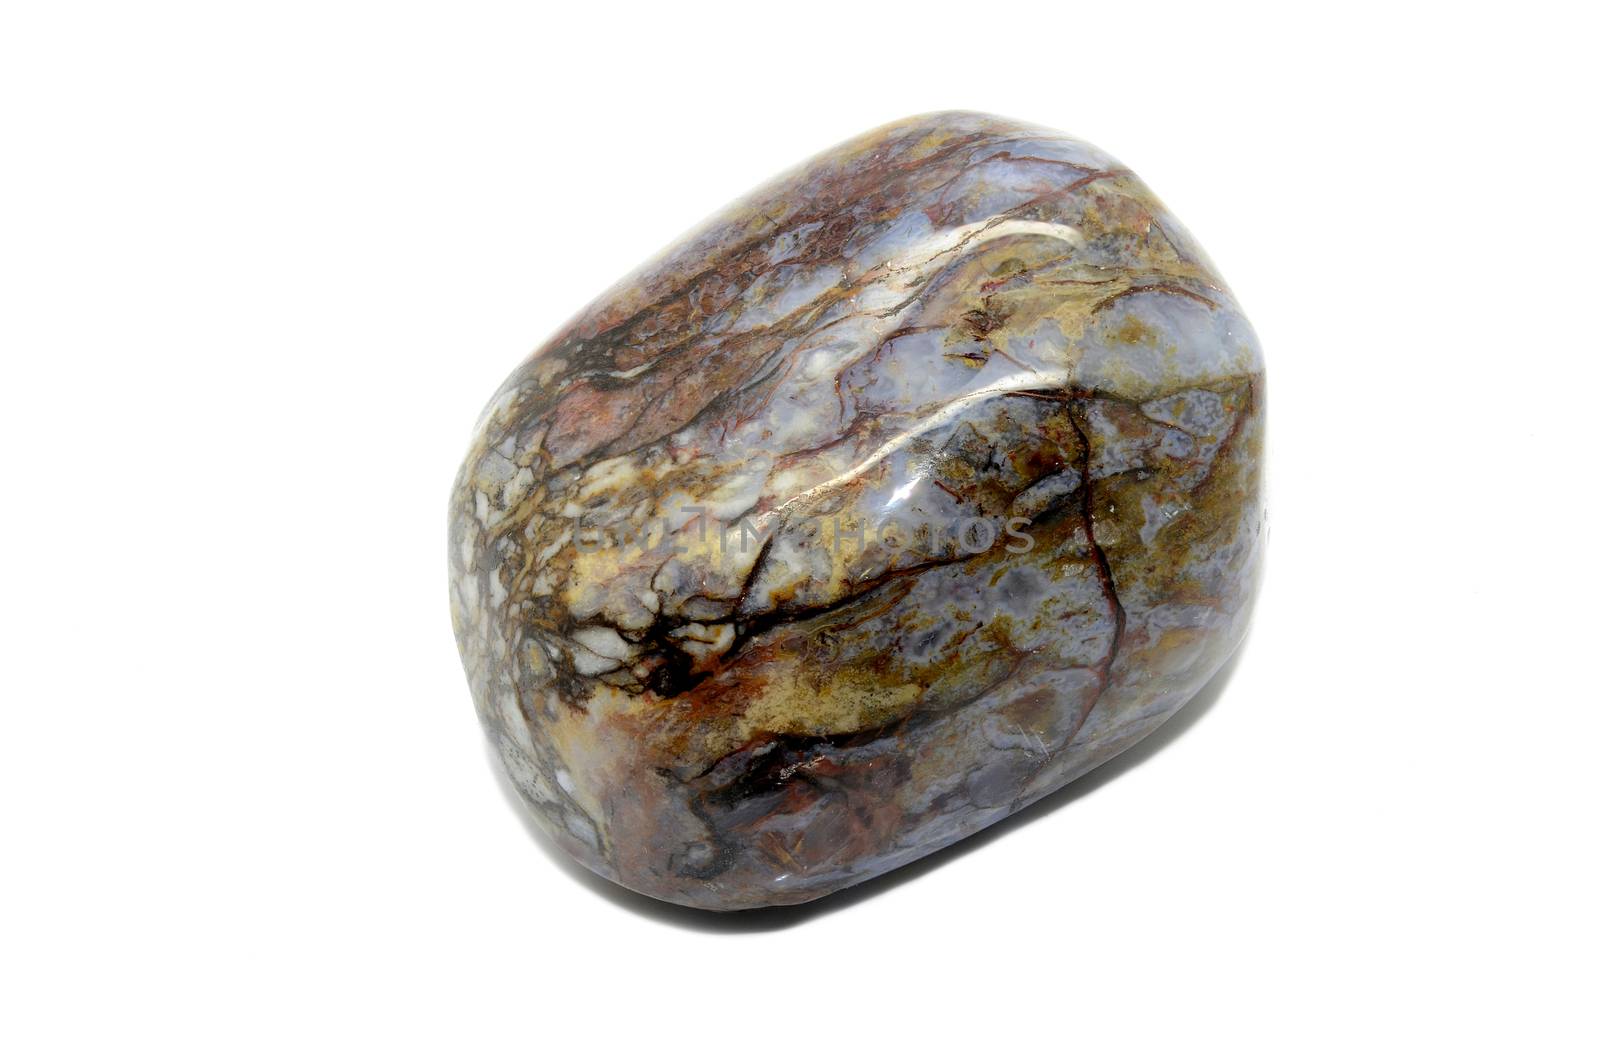 Sample of a beautiful Pietersite tumbled gemstone specimen isolated on white background